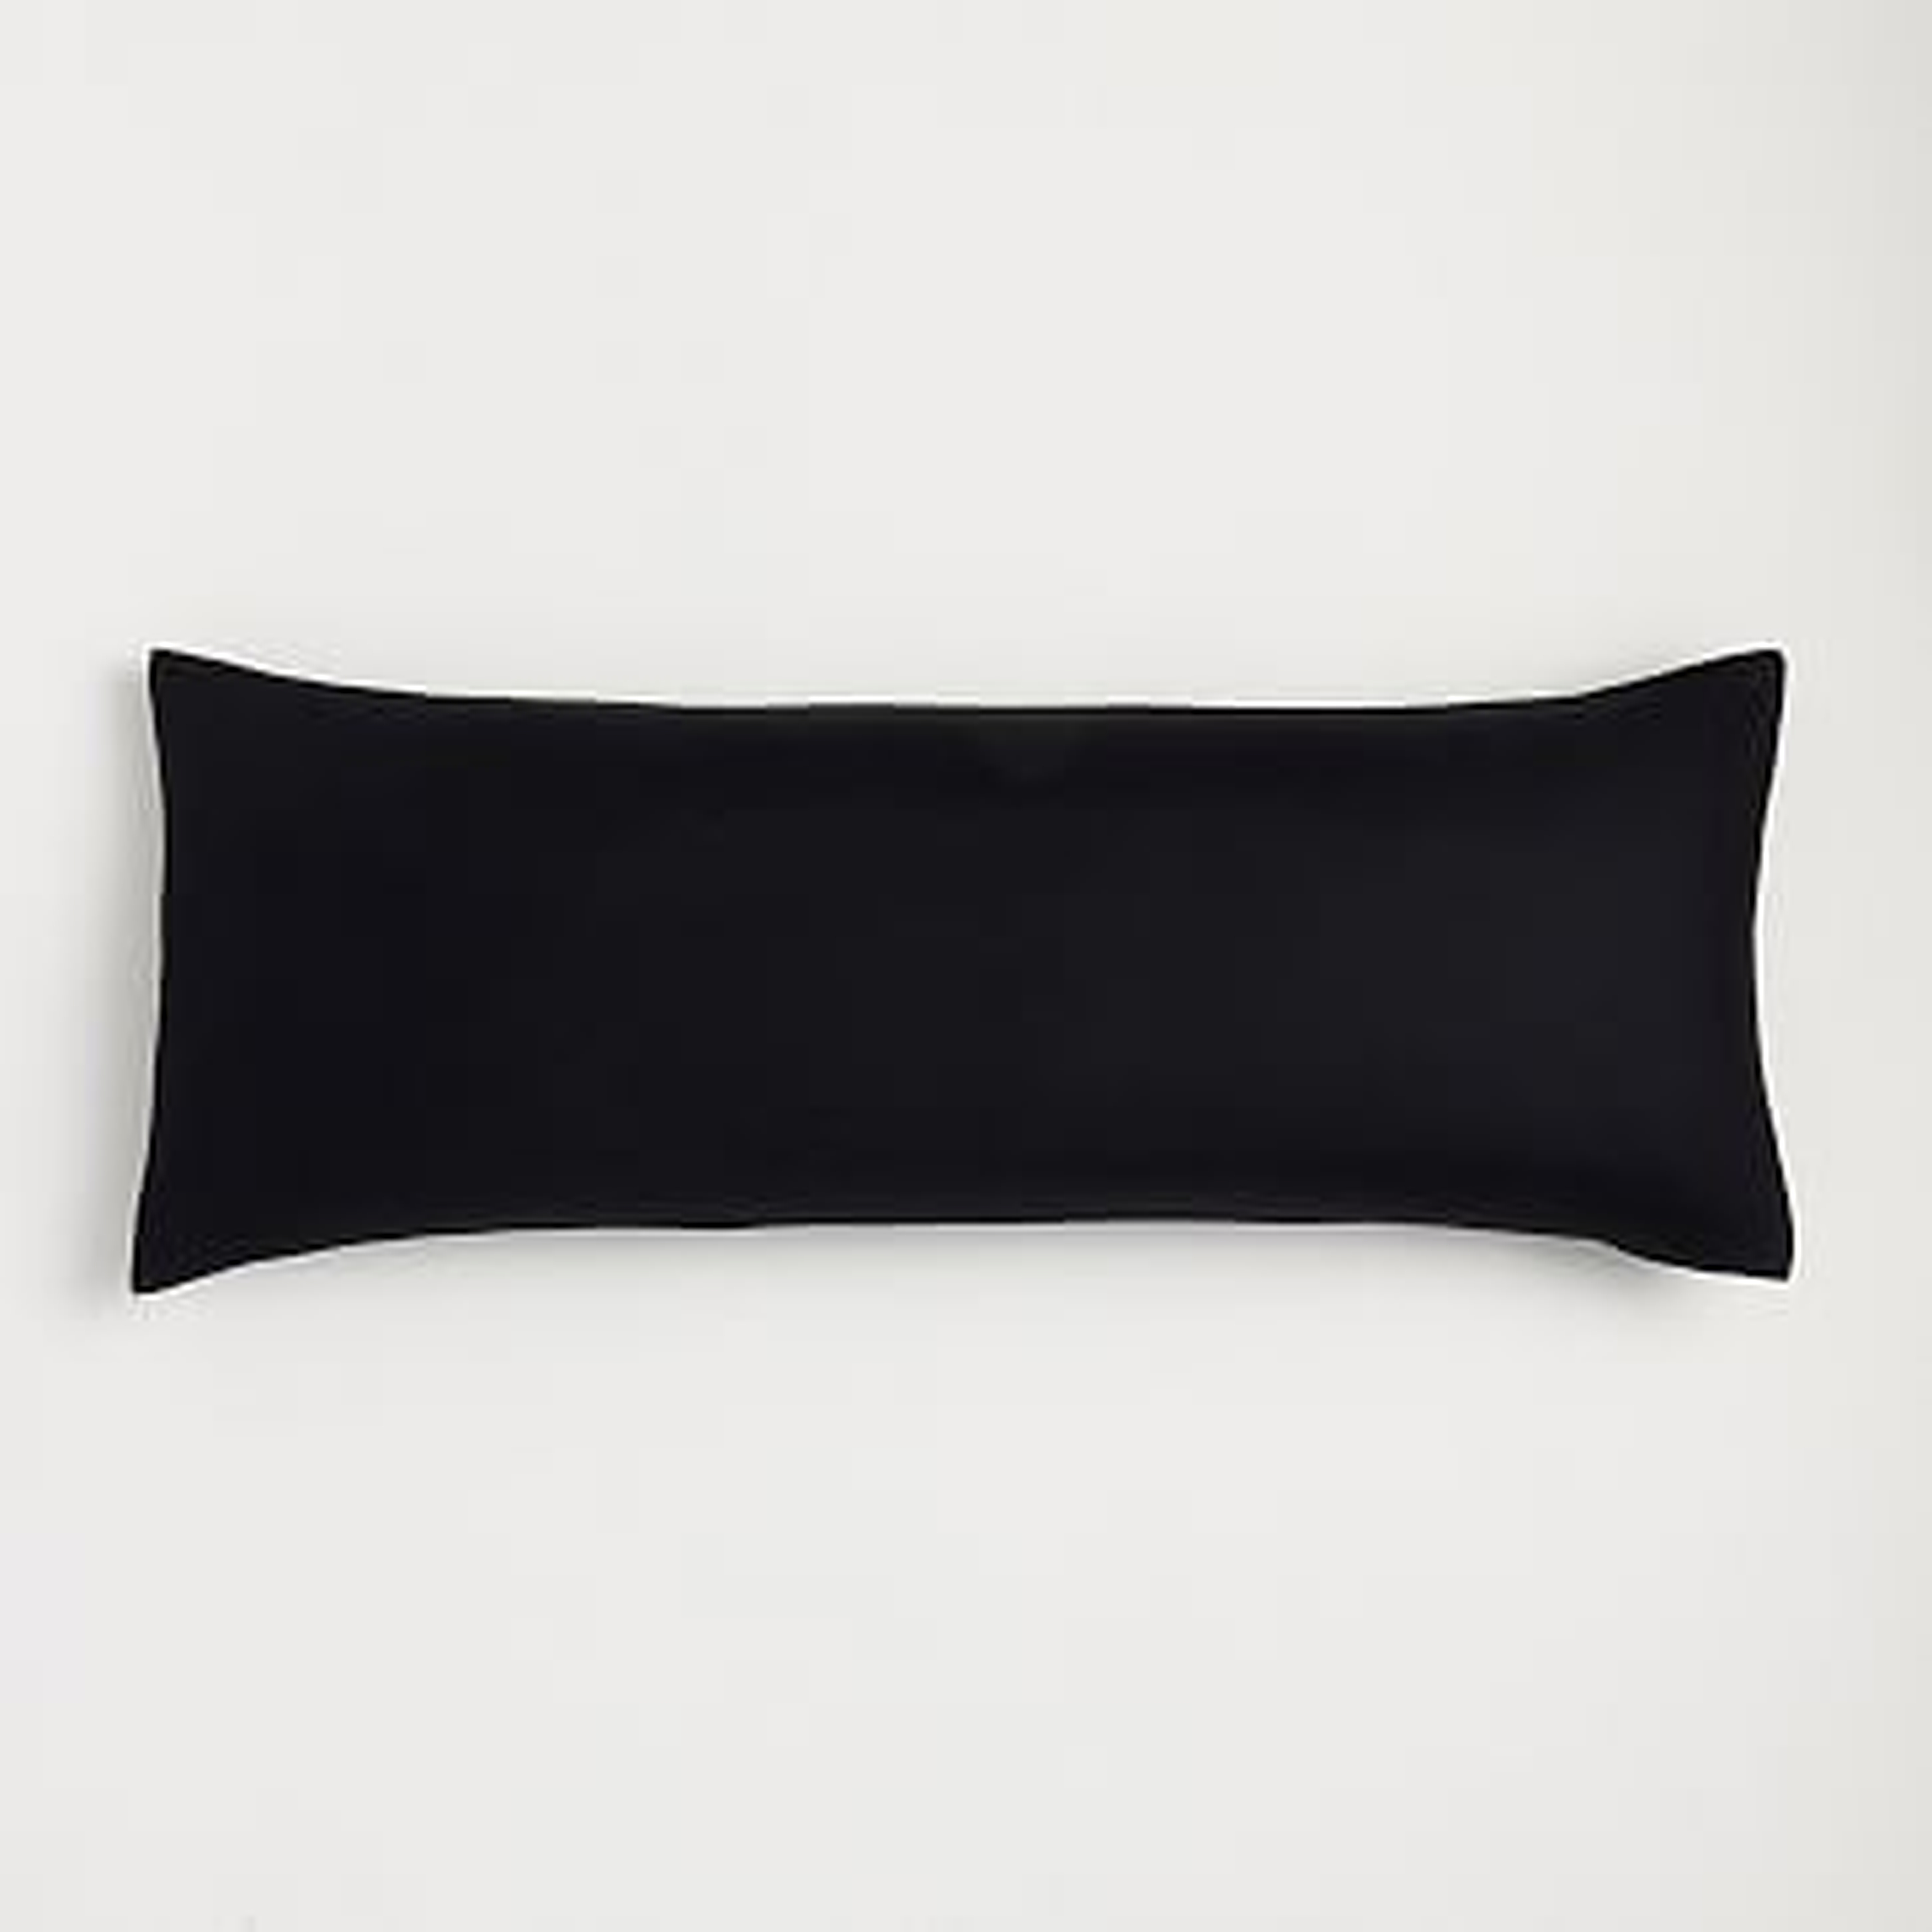 European Flax Linen Body Pillow Cover, One Size, BLACK - West Elm